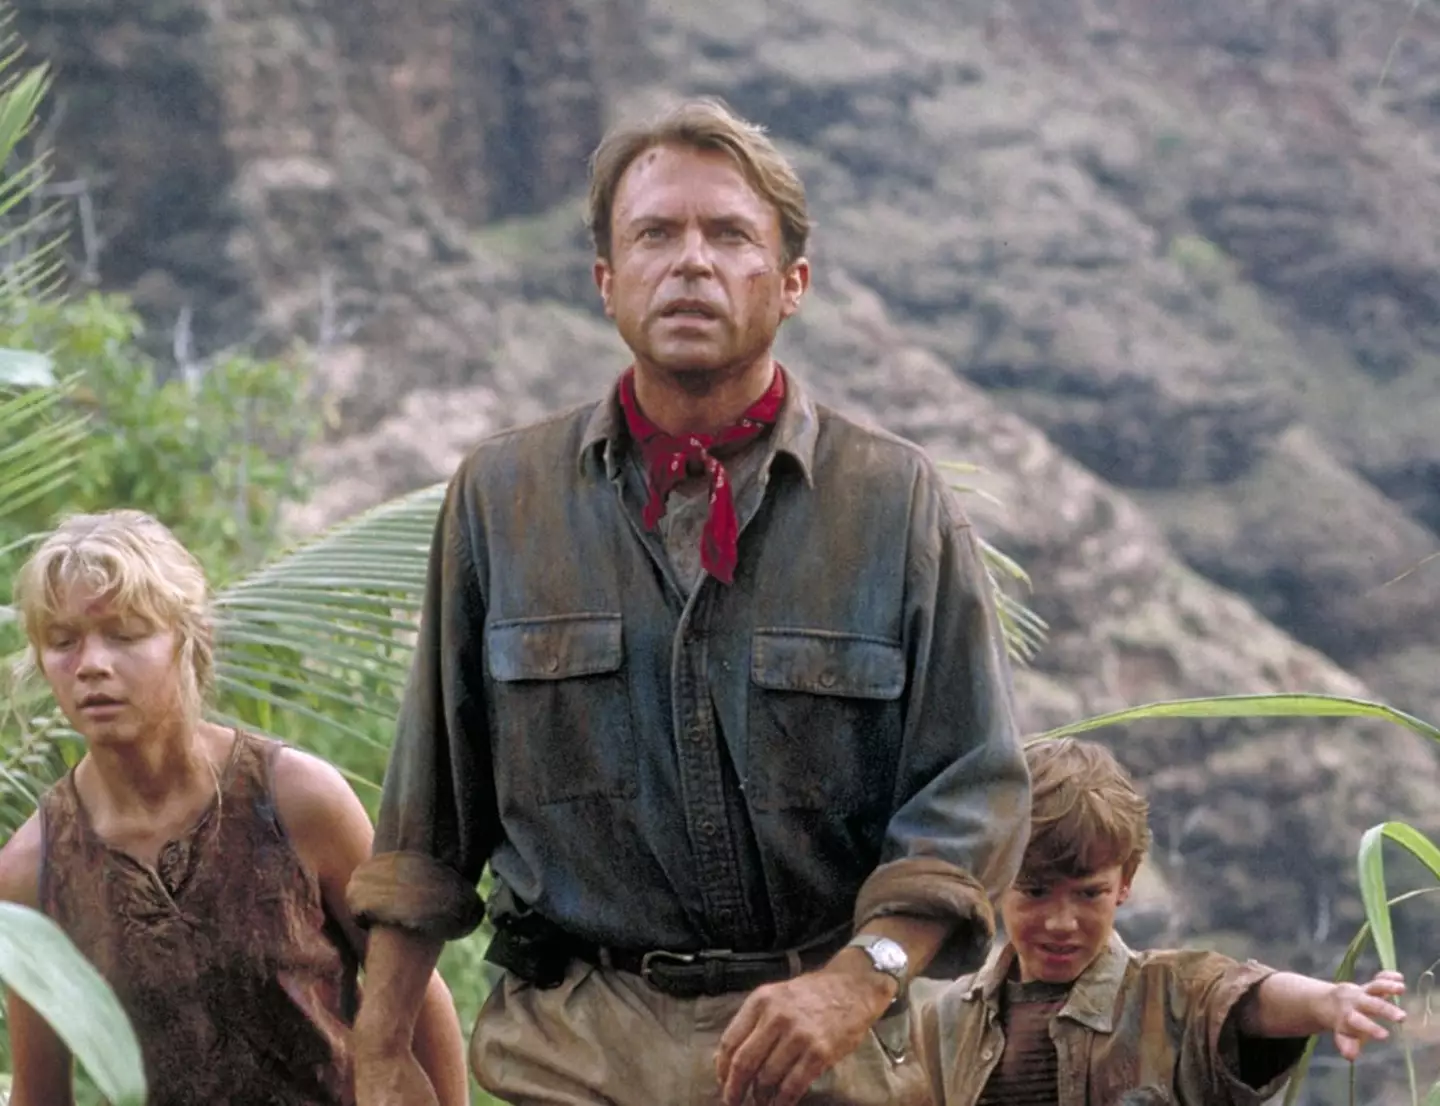 Sam Niell starred as Grant in Jurassic Park.